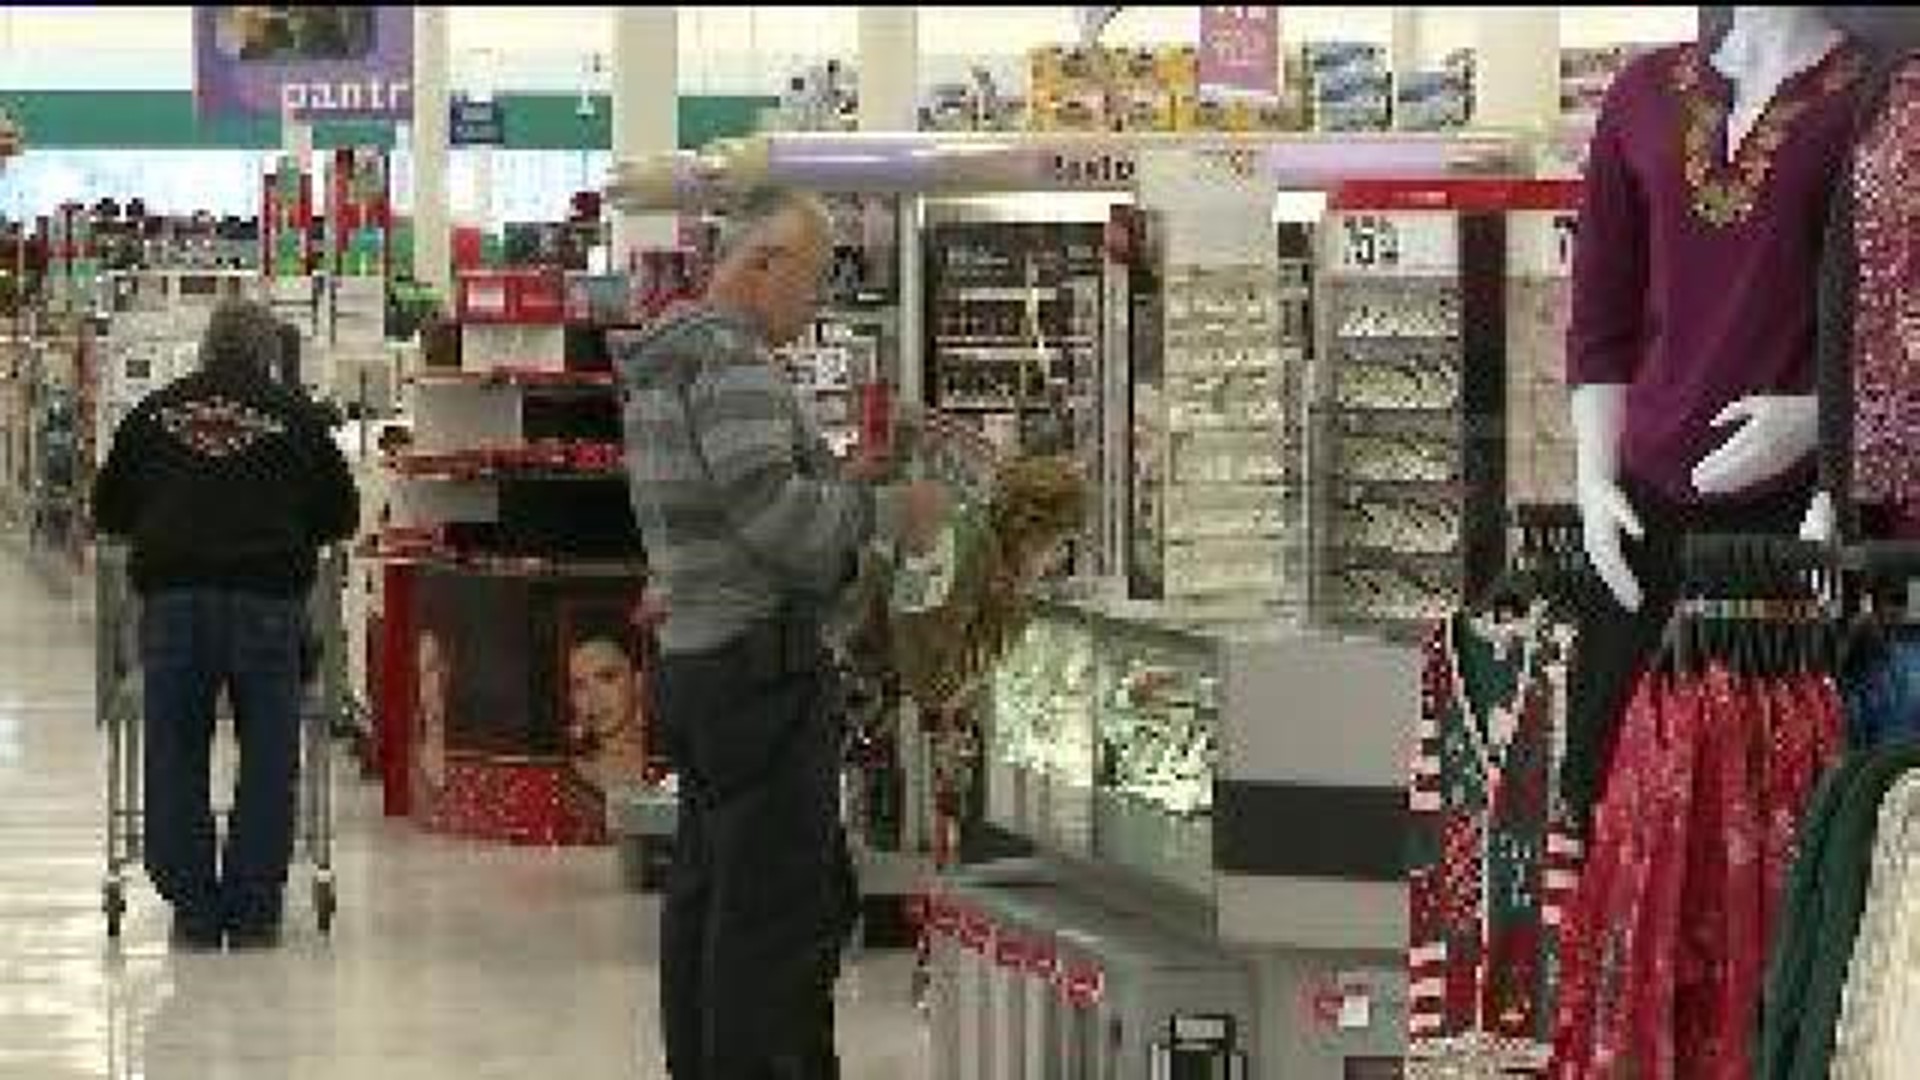 Holiday Shoppers Take Advantage of "Gray Thursday"